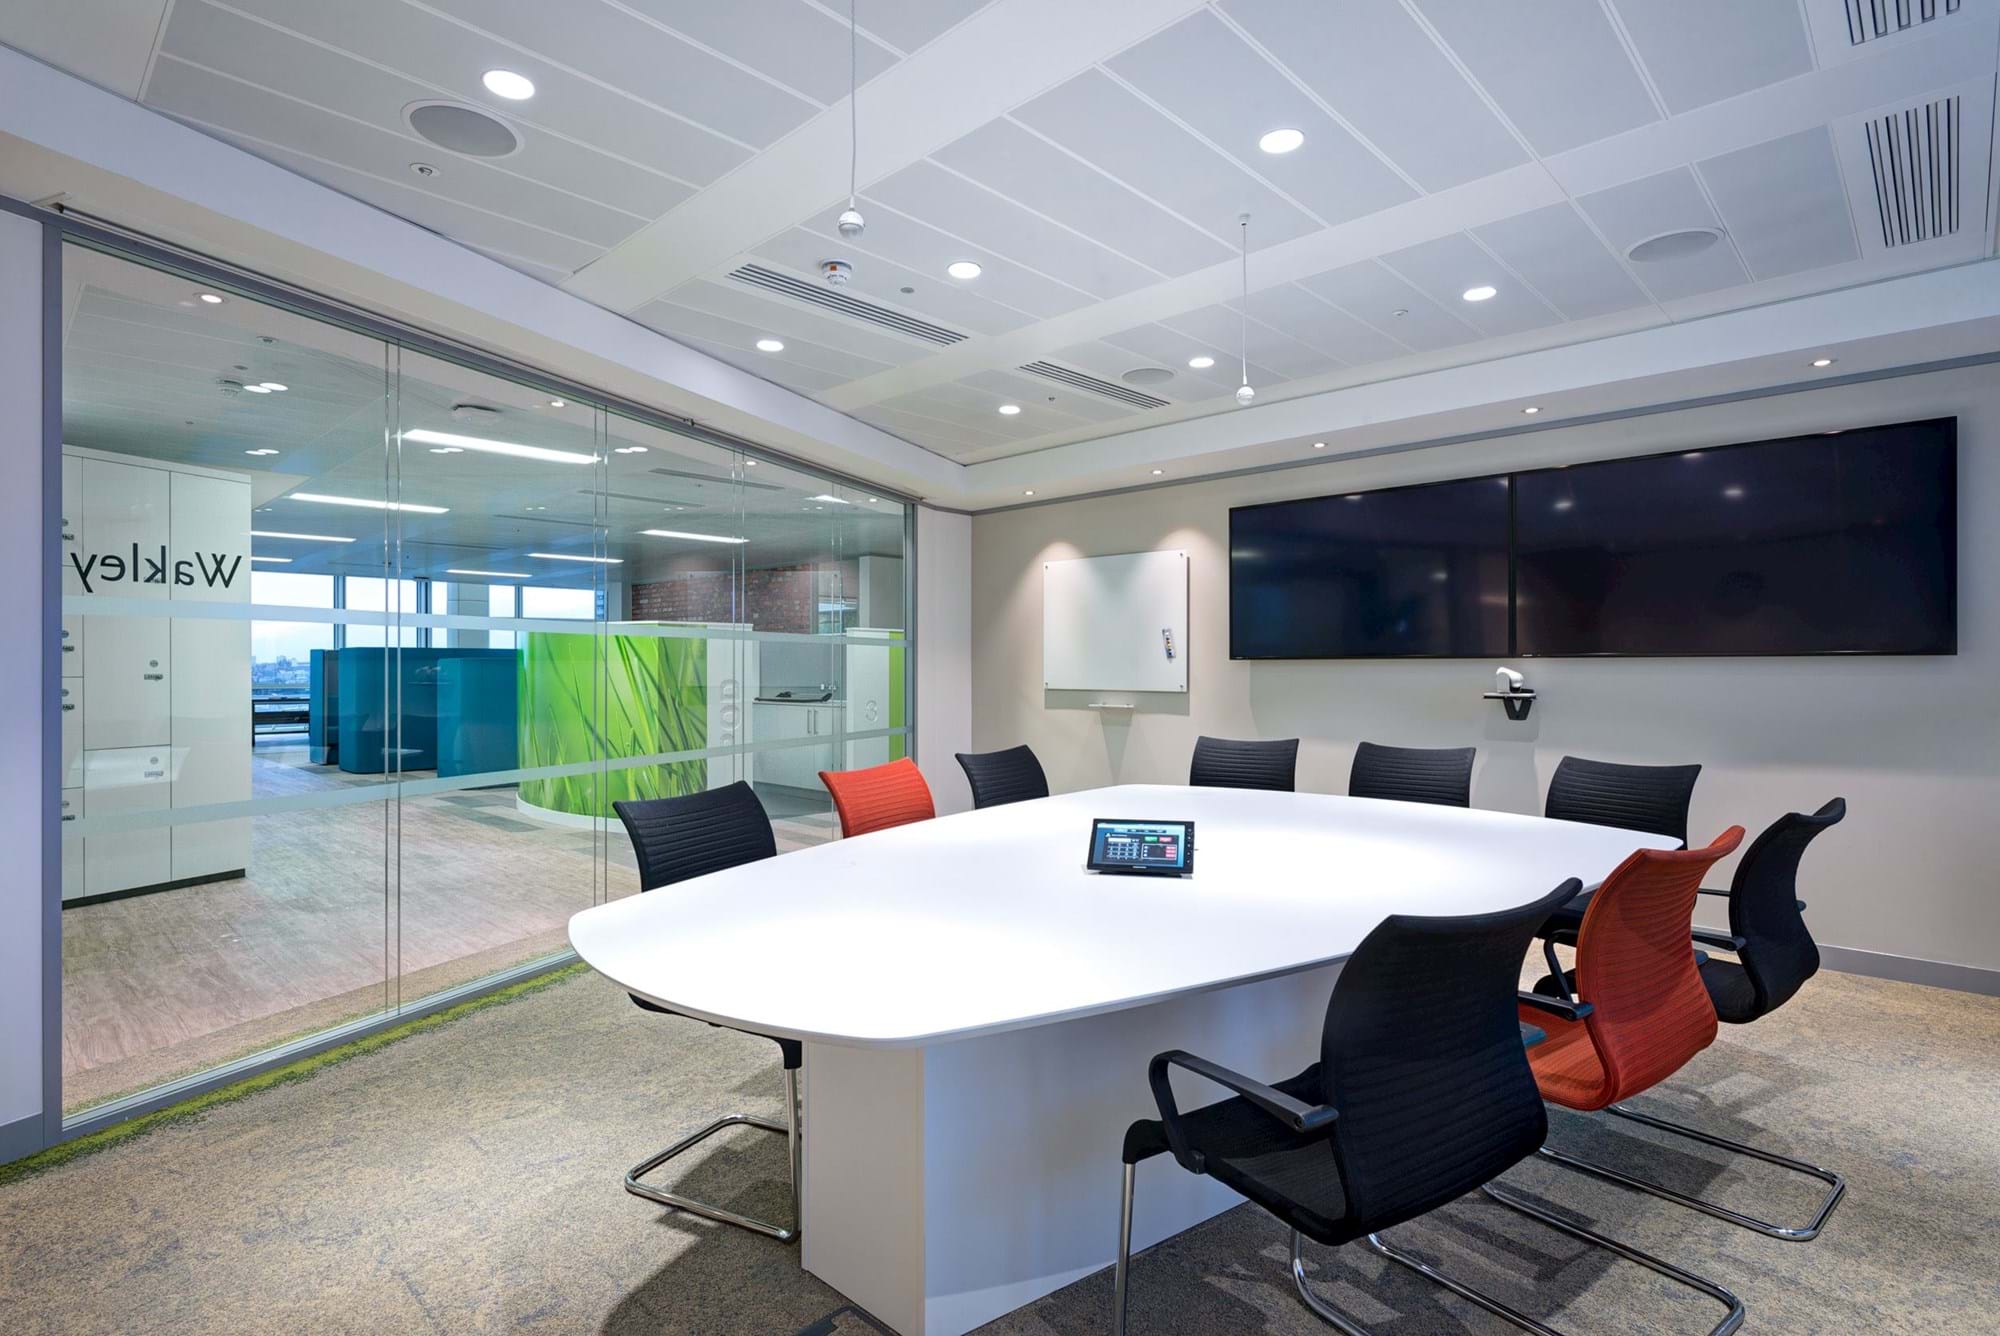 Modus Workspace office design, fit out and refurbishment - Reed Elsevier - Meeting Room - Reed Elsevier 08 darker highres sRGB.jpg